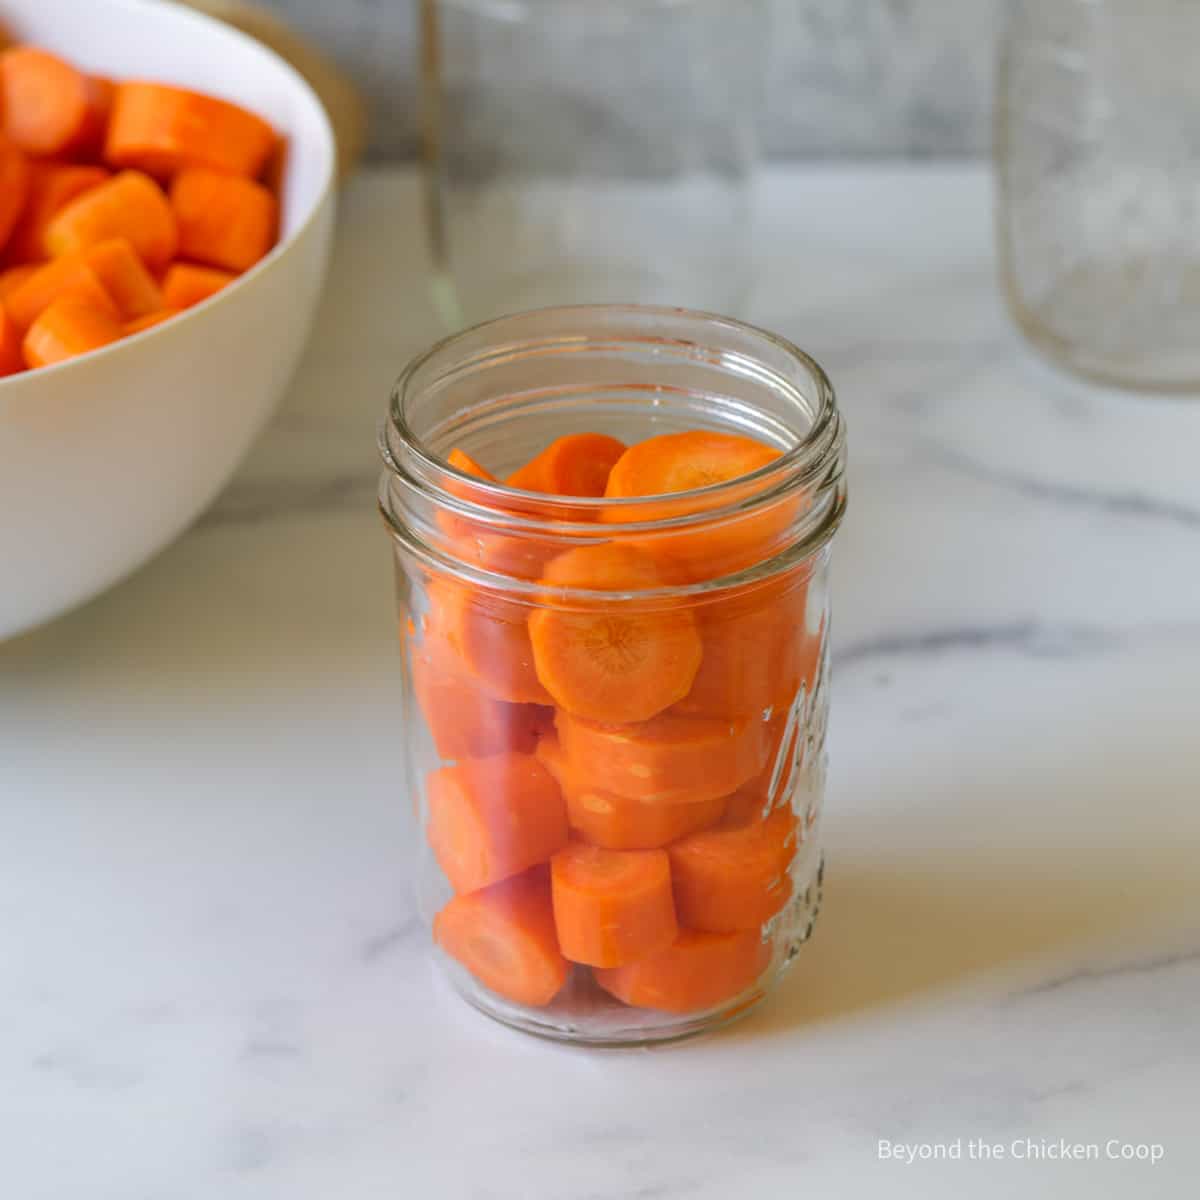 Cut carrots in a glass jar.